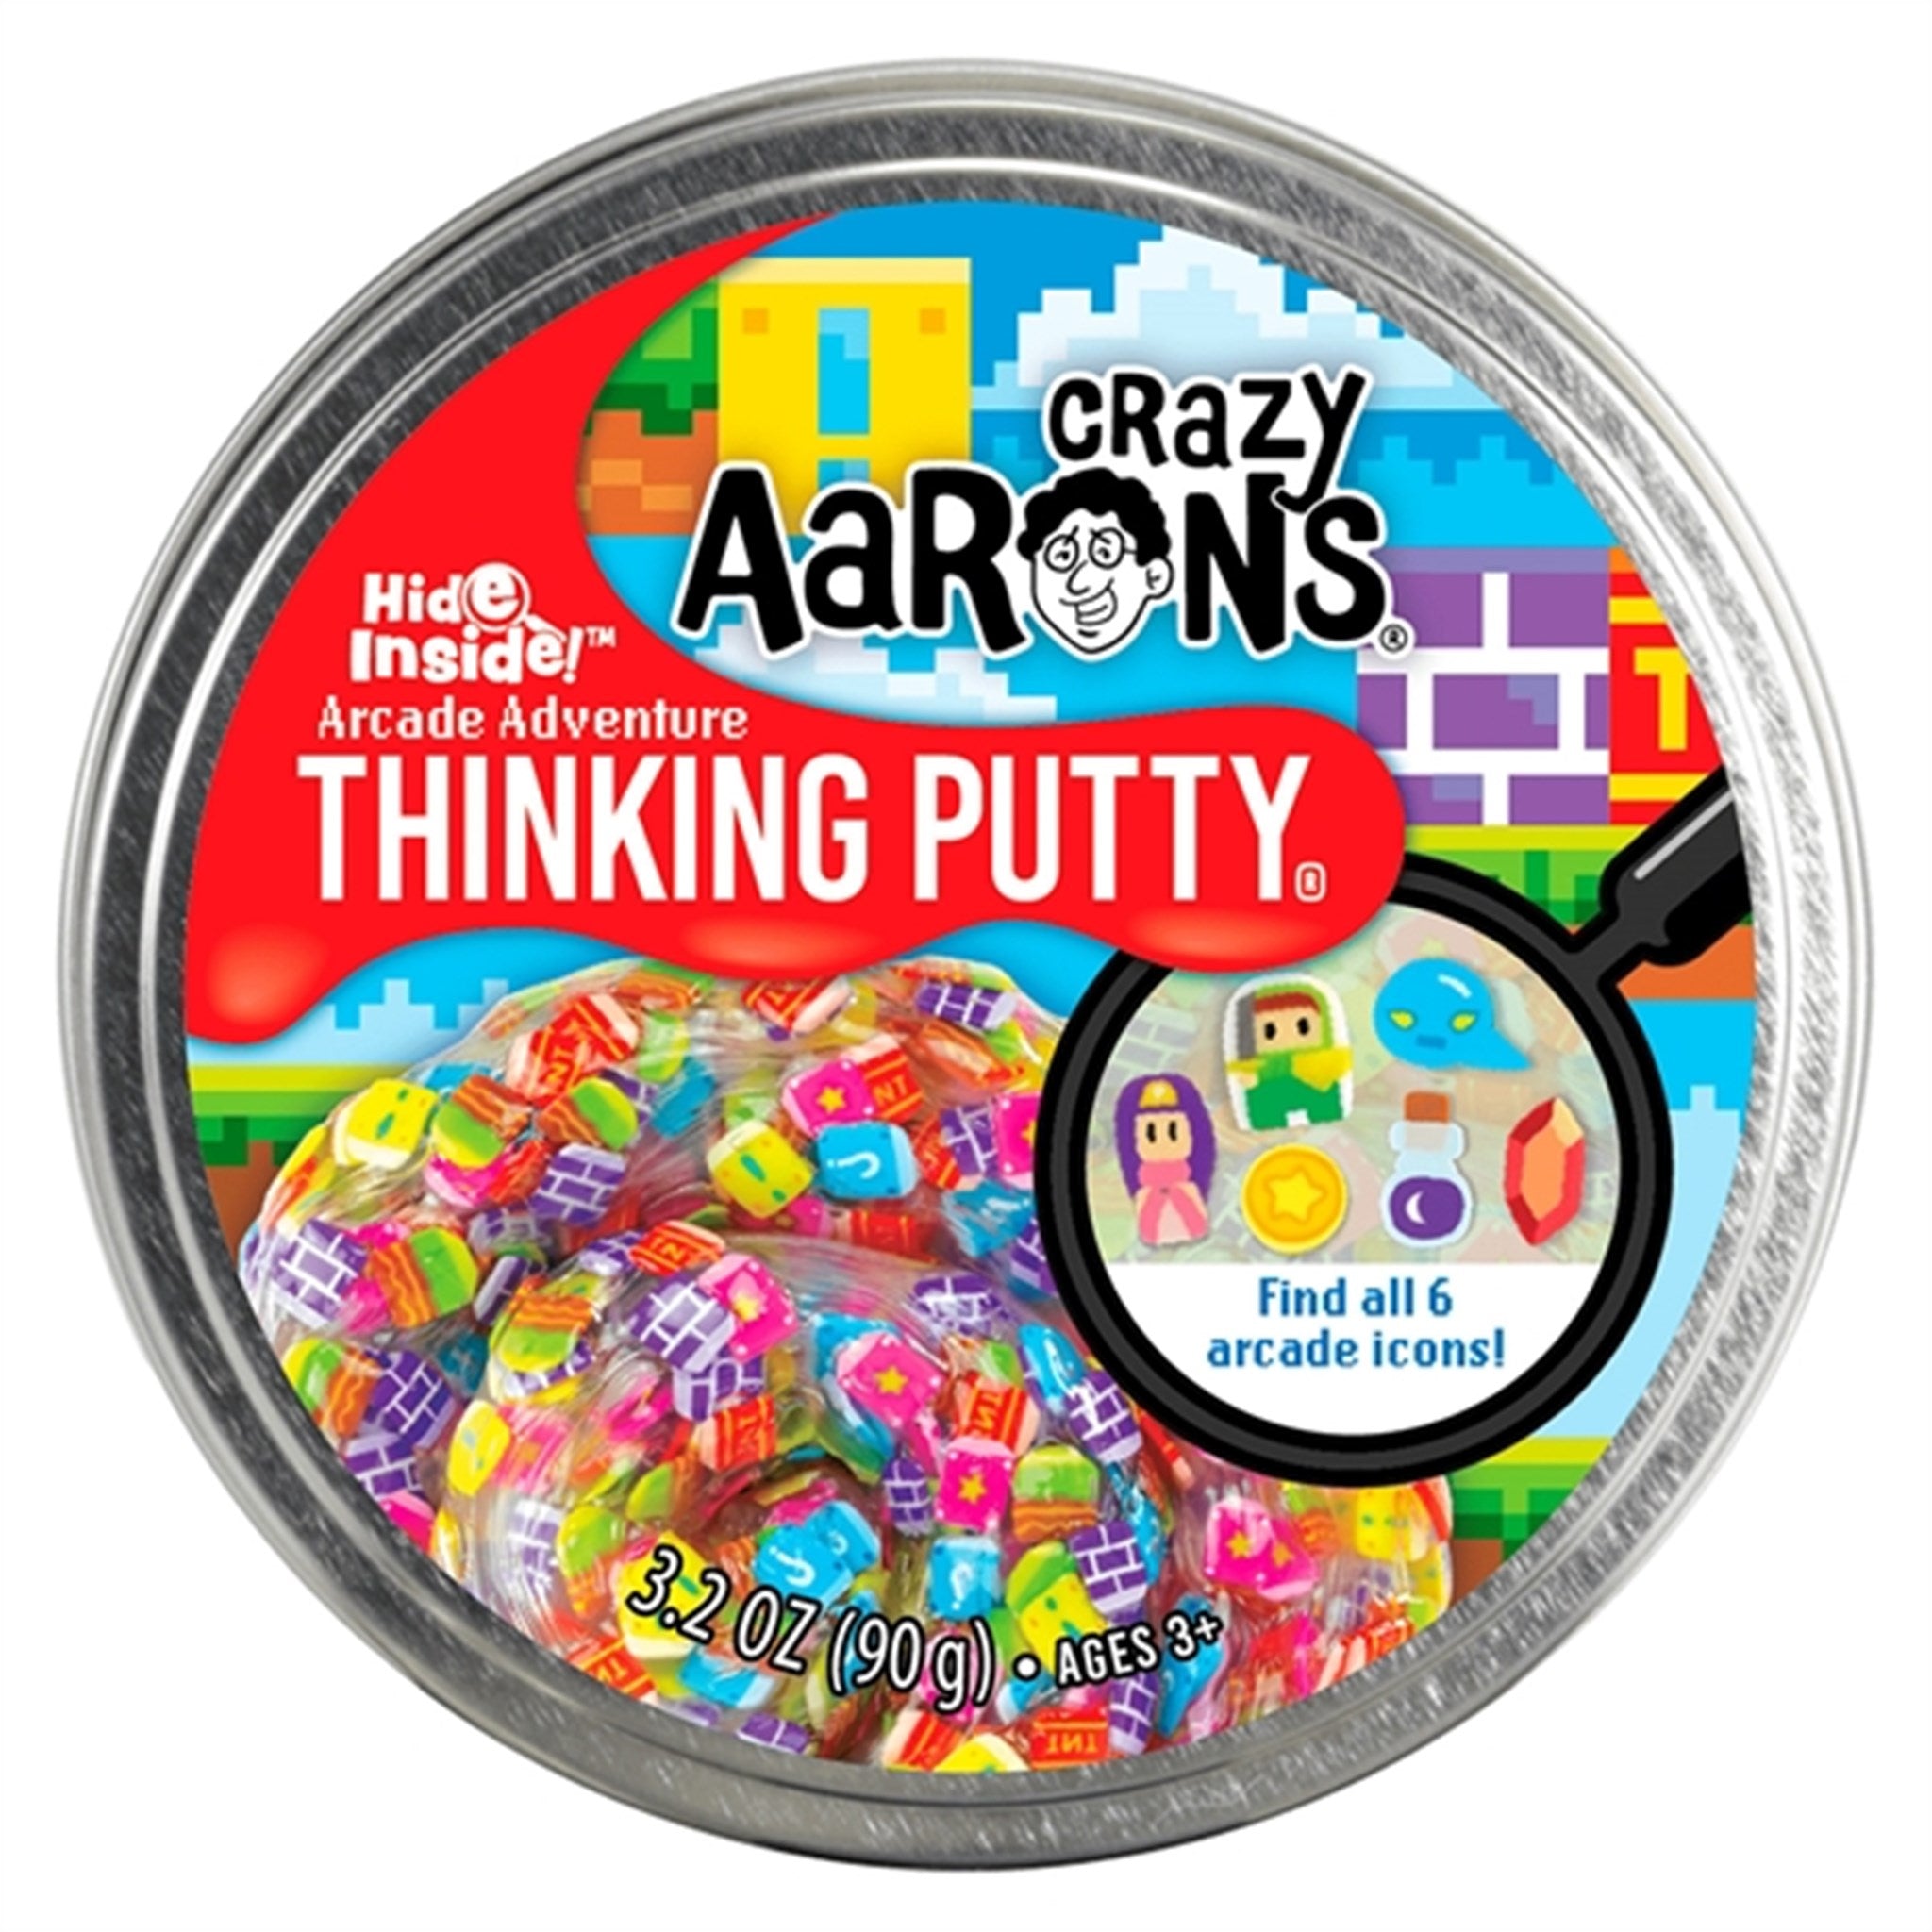 Crazy Aaron's® Thinking Putty Hide Inside! - Arcade Adventure